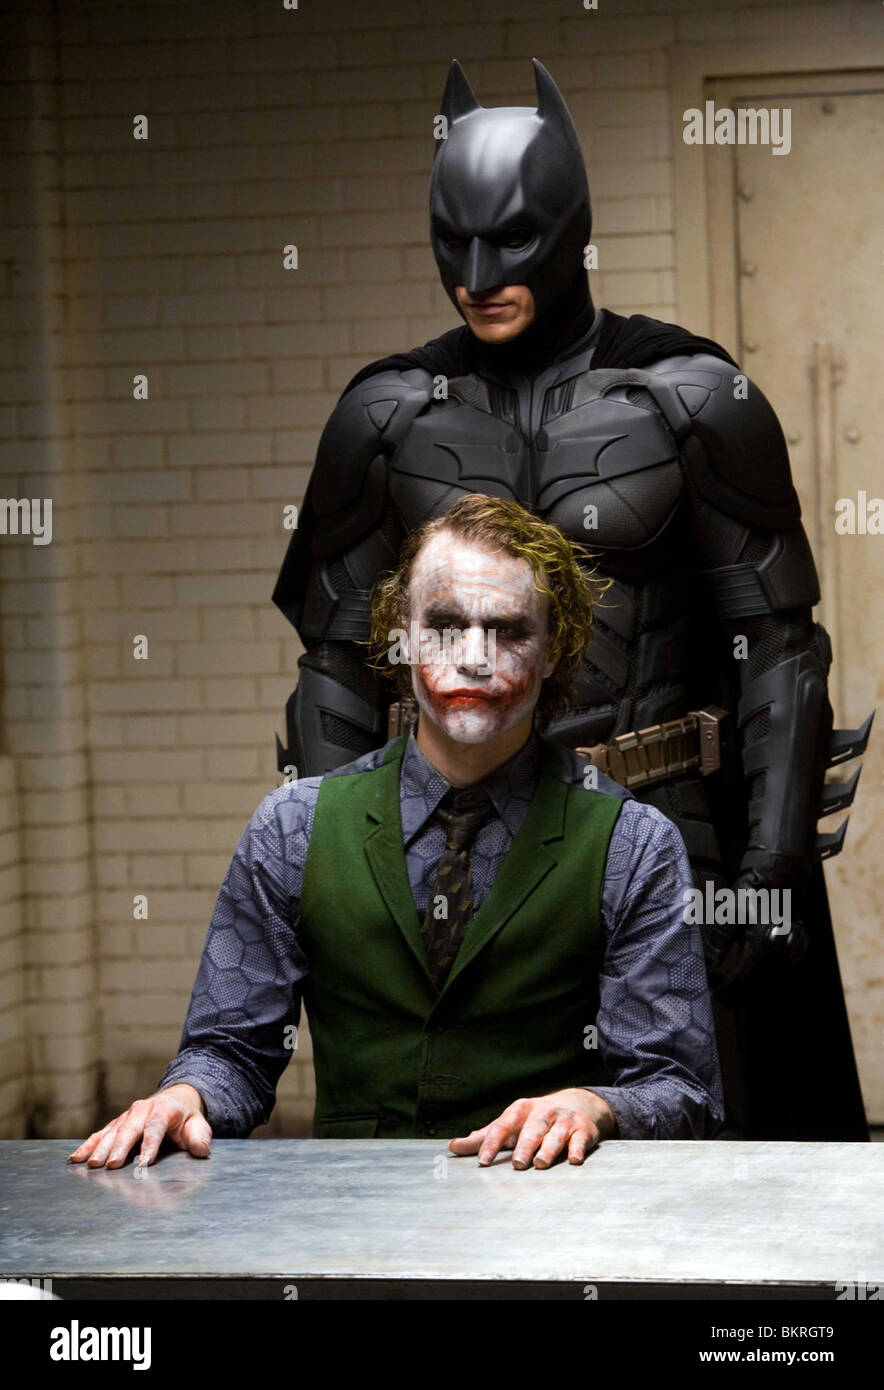 012 THE DARK KNIGHT Movie PHOTO Print POSTER Heath Ledger Joker Why So Serious 